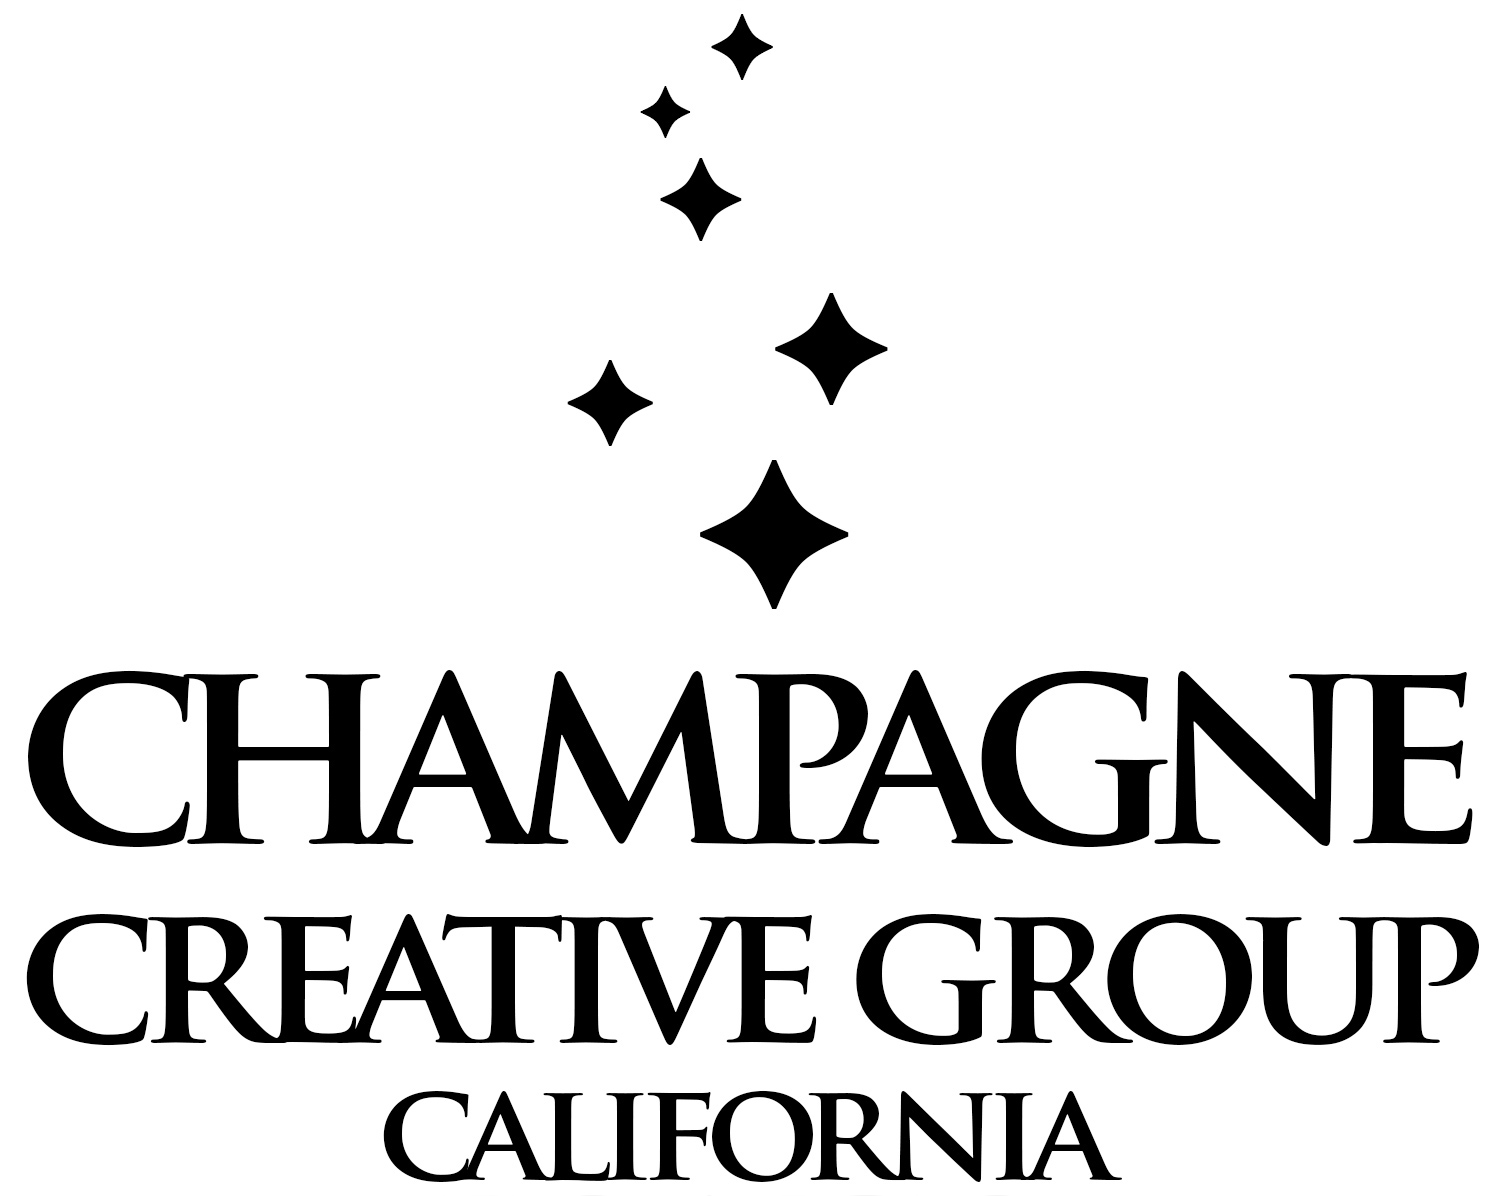 ChampagneCreativeGroup_California